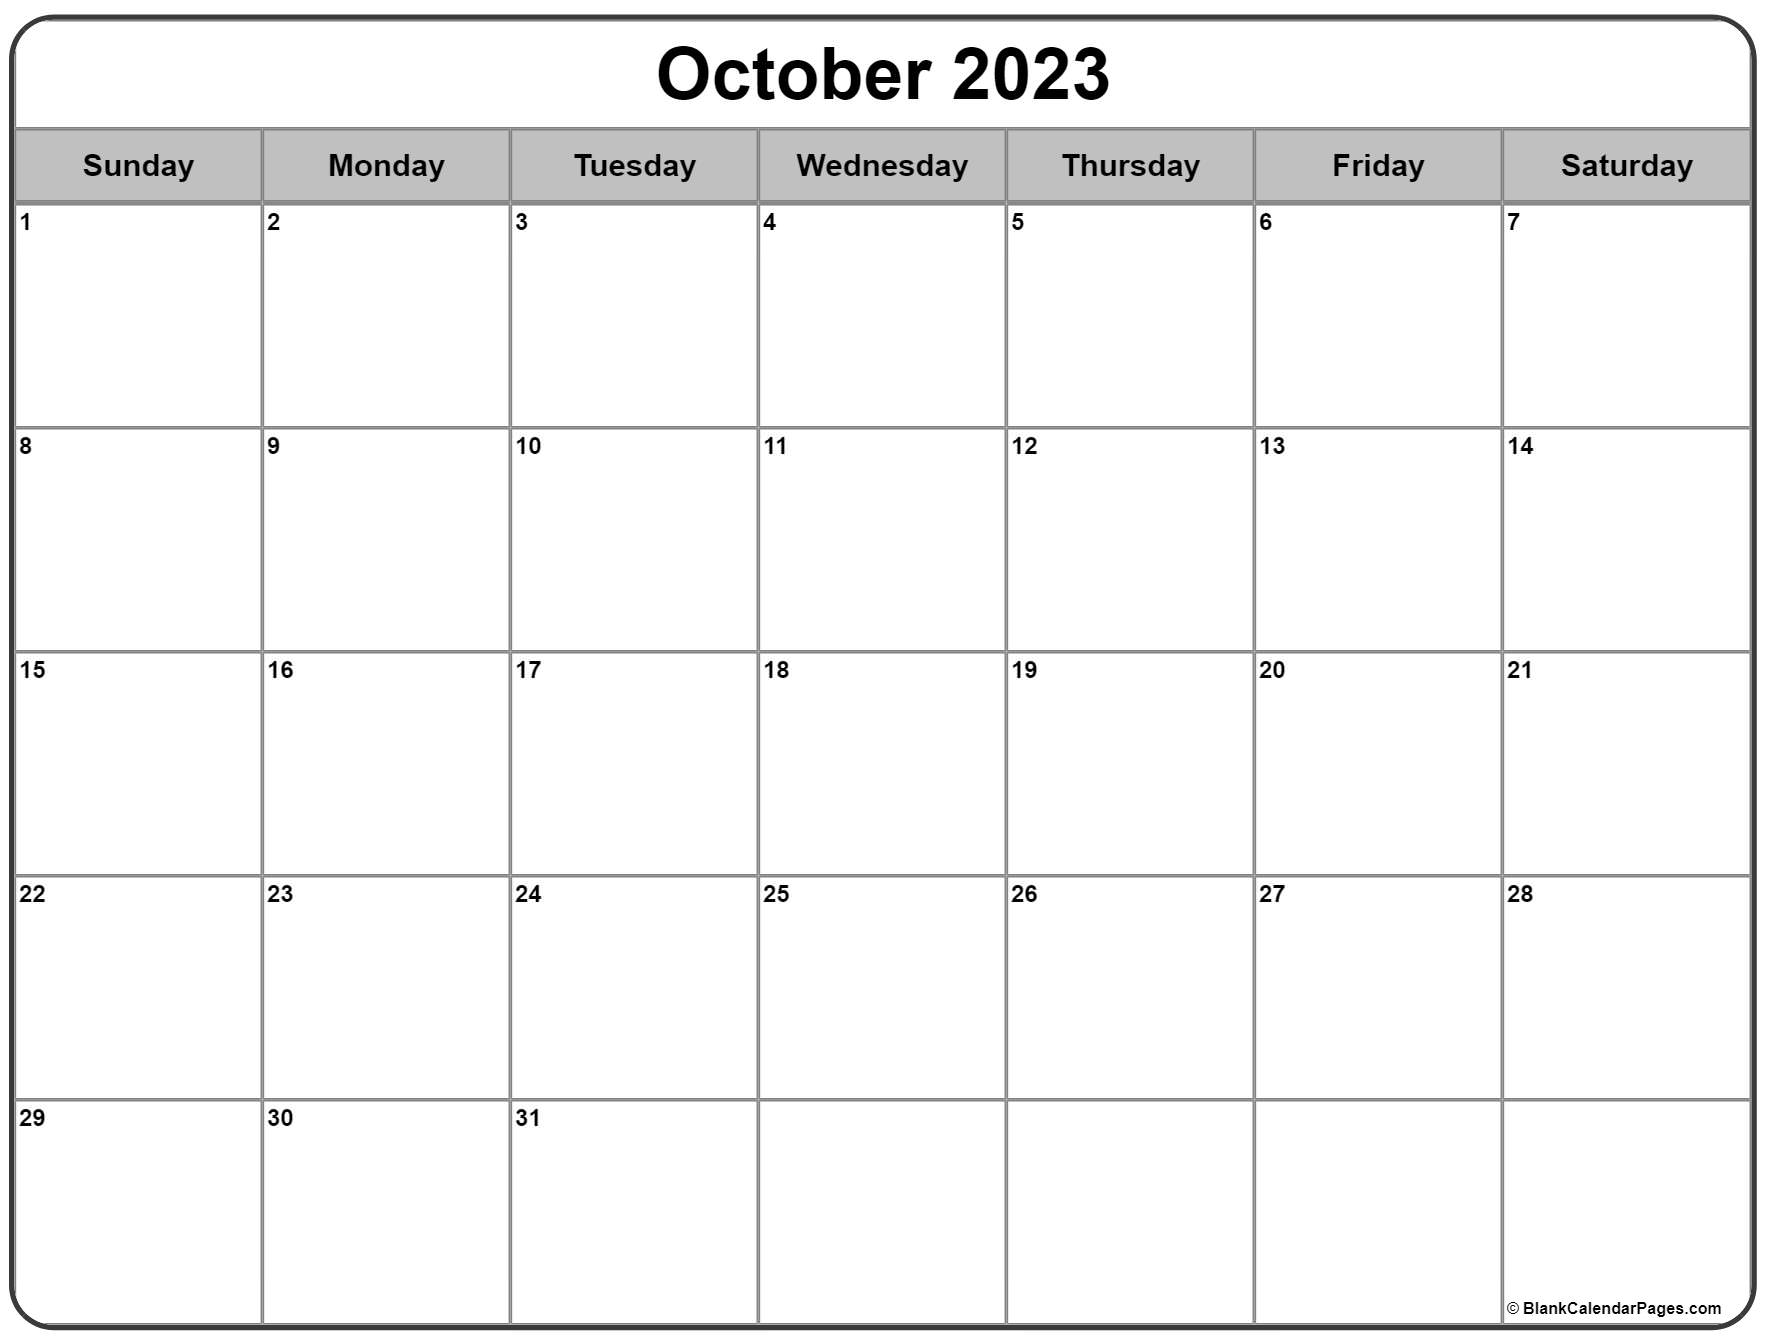 2023 October Calendars Handy Calendars Riset